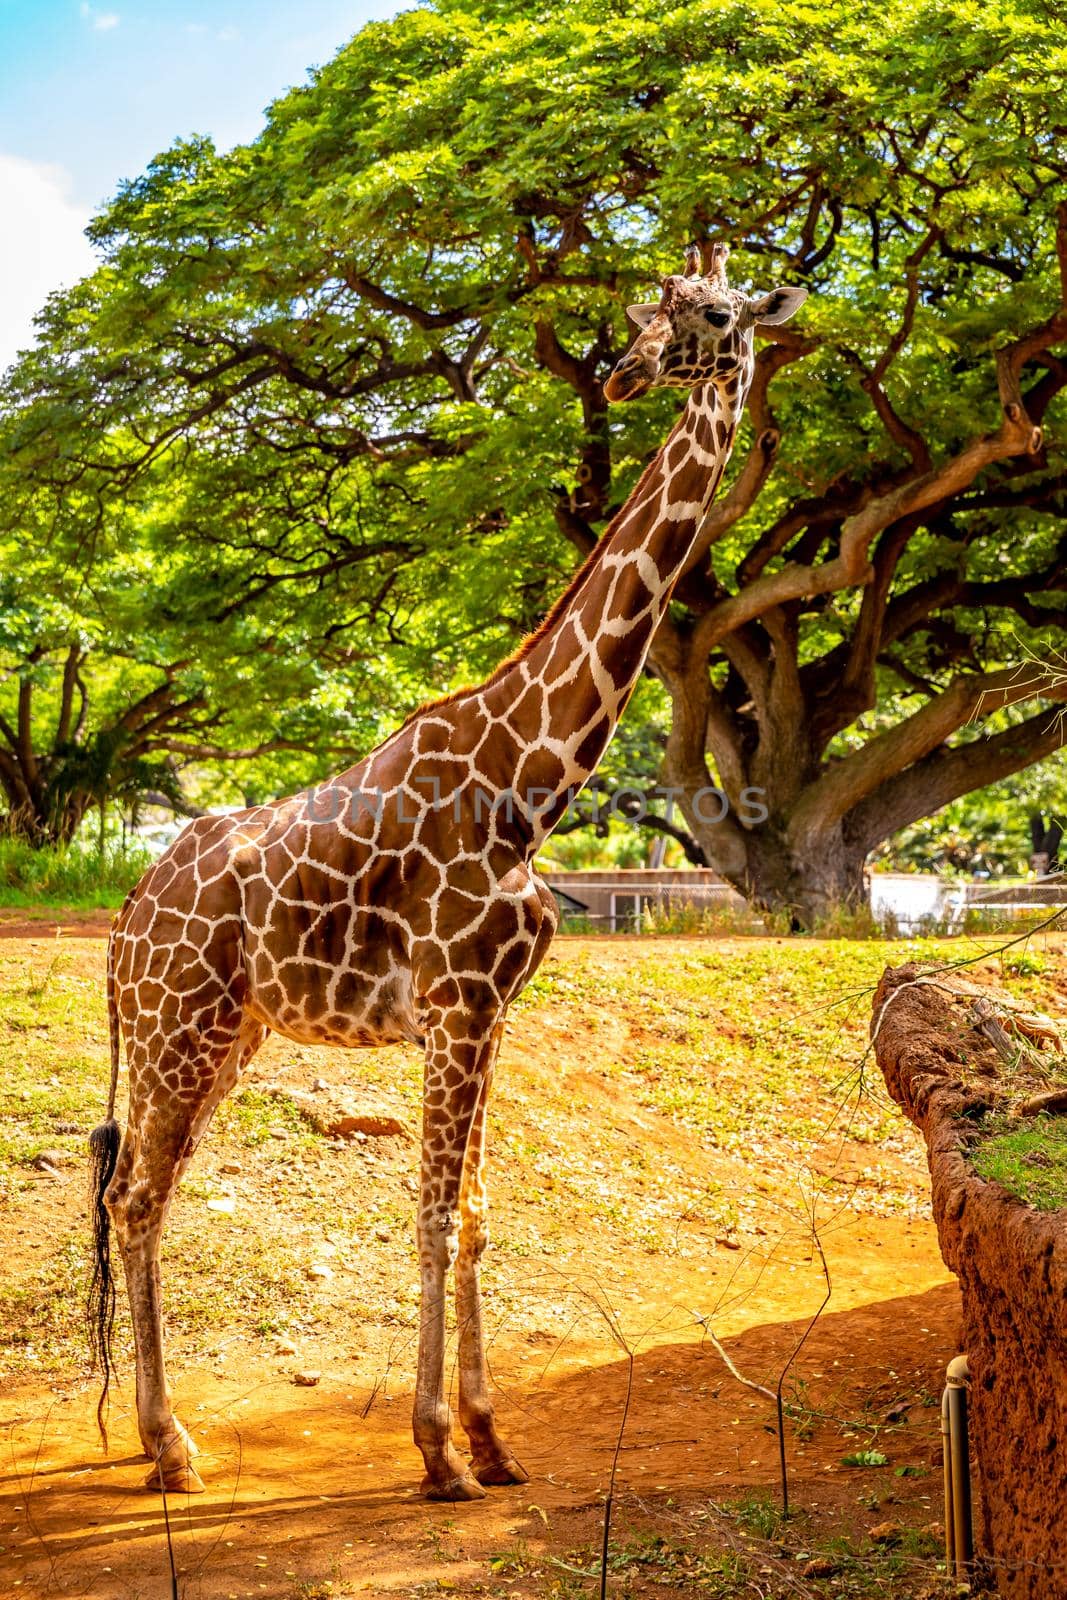 Giraffe Standing under the tree